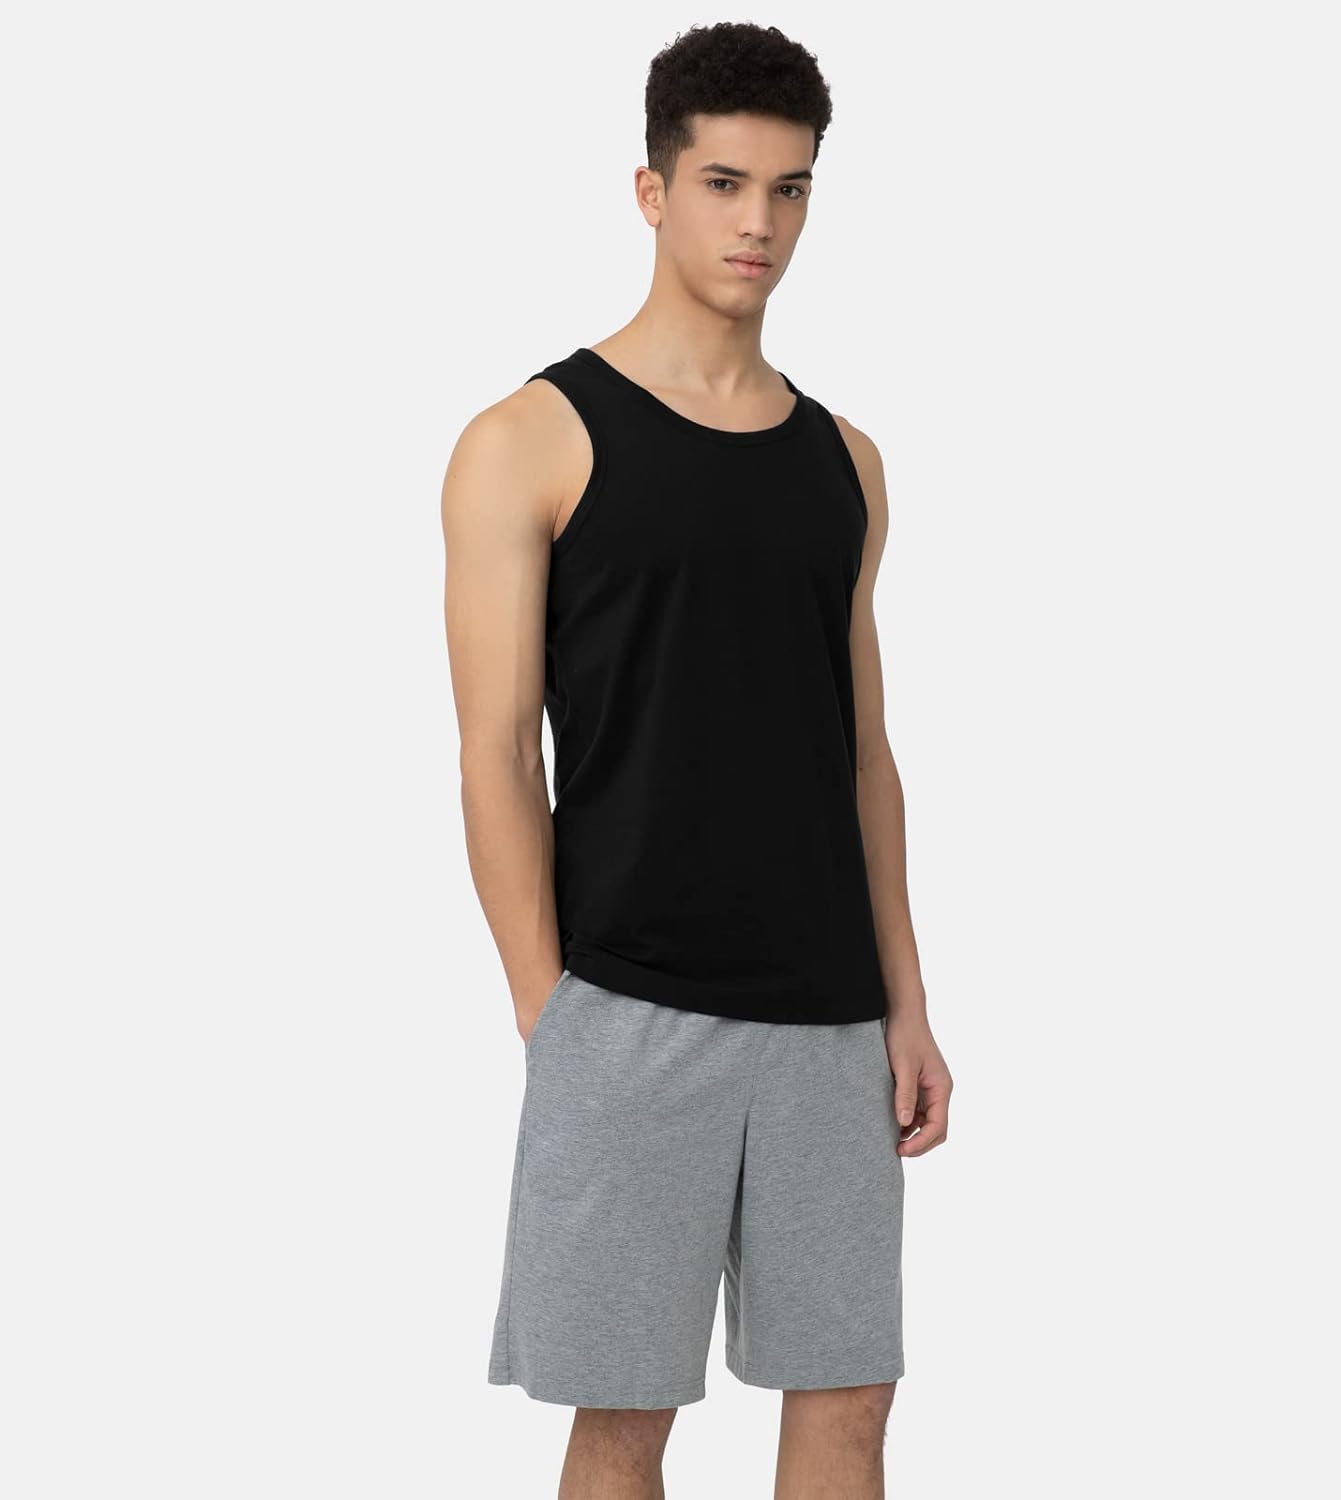 Wholesale Men's 100% Cotton Tank Top Ultra Soft Sleeveless Undershirts - Black